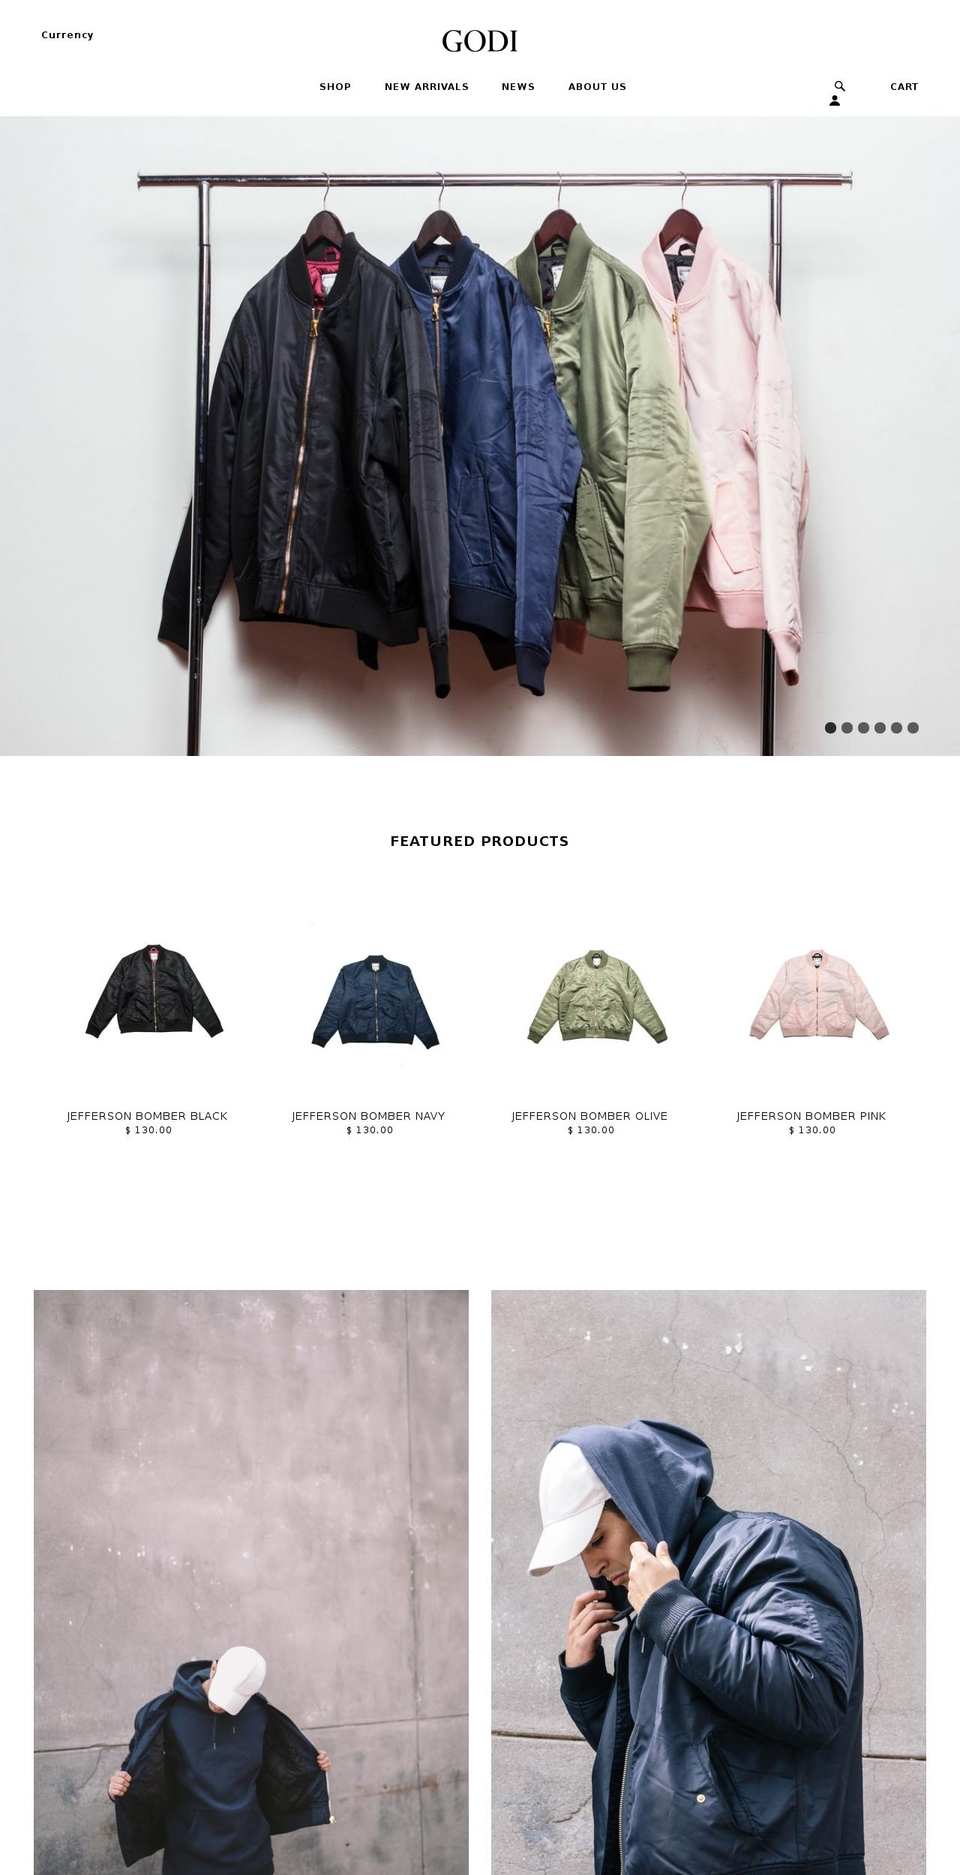 godiwear.com shopify website screenshot